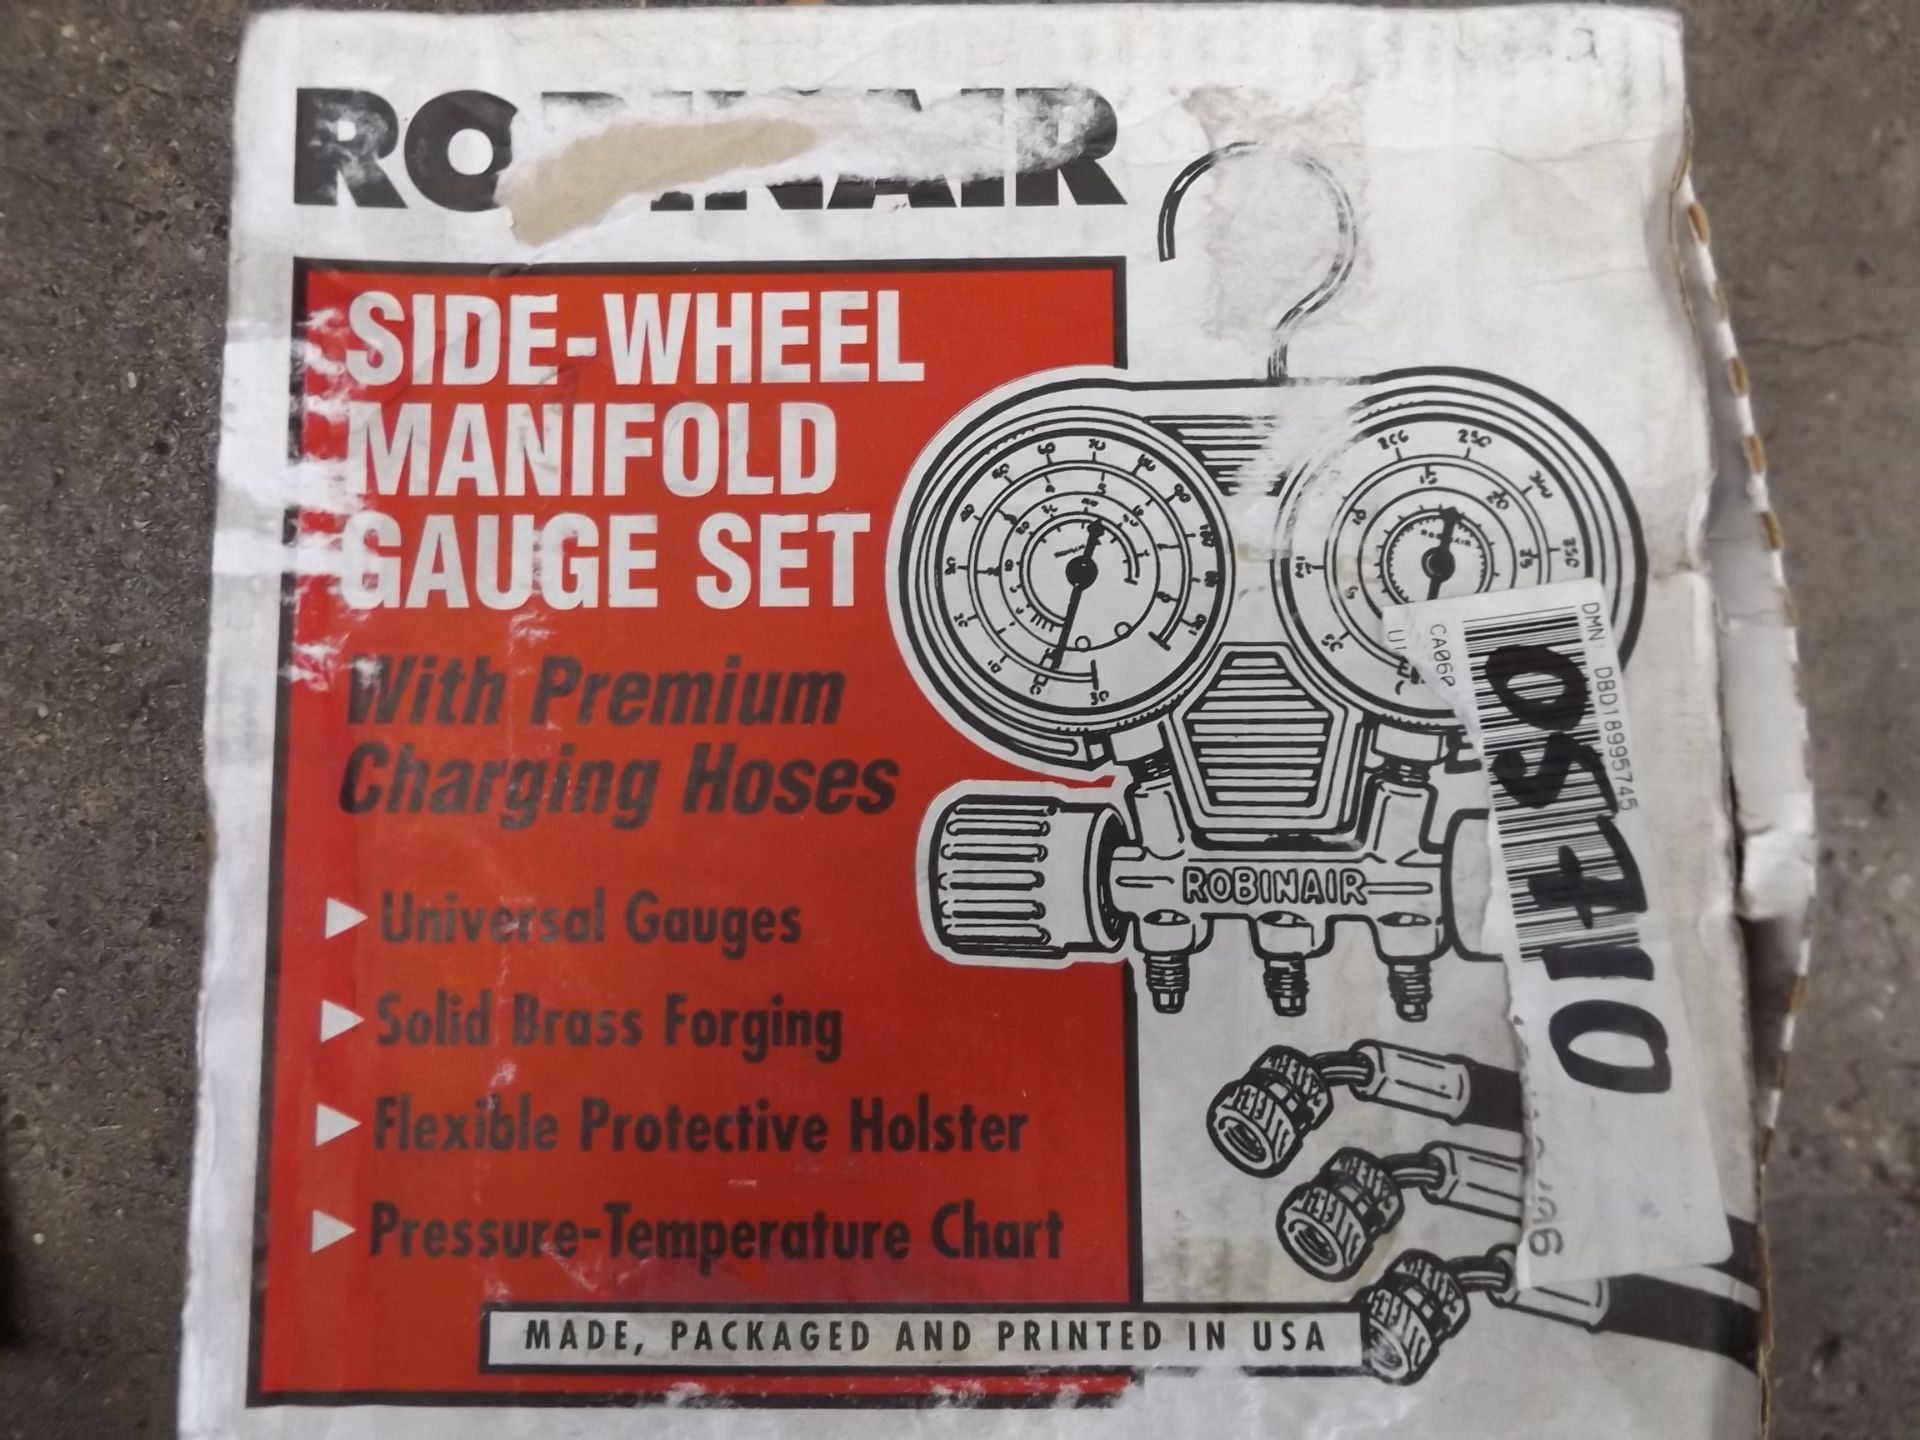 Robinair Side Wheel Manifold Gauge Set with Premium Charging Hoses - Bild 4 aus 4